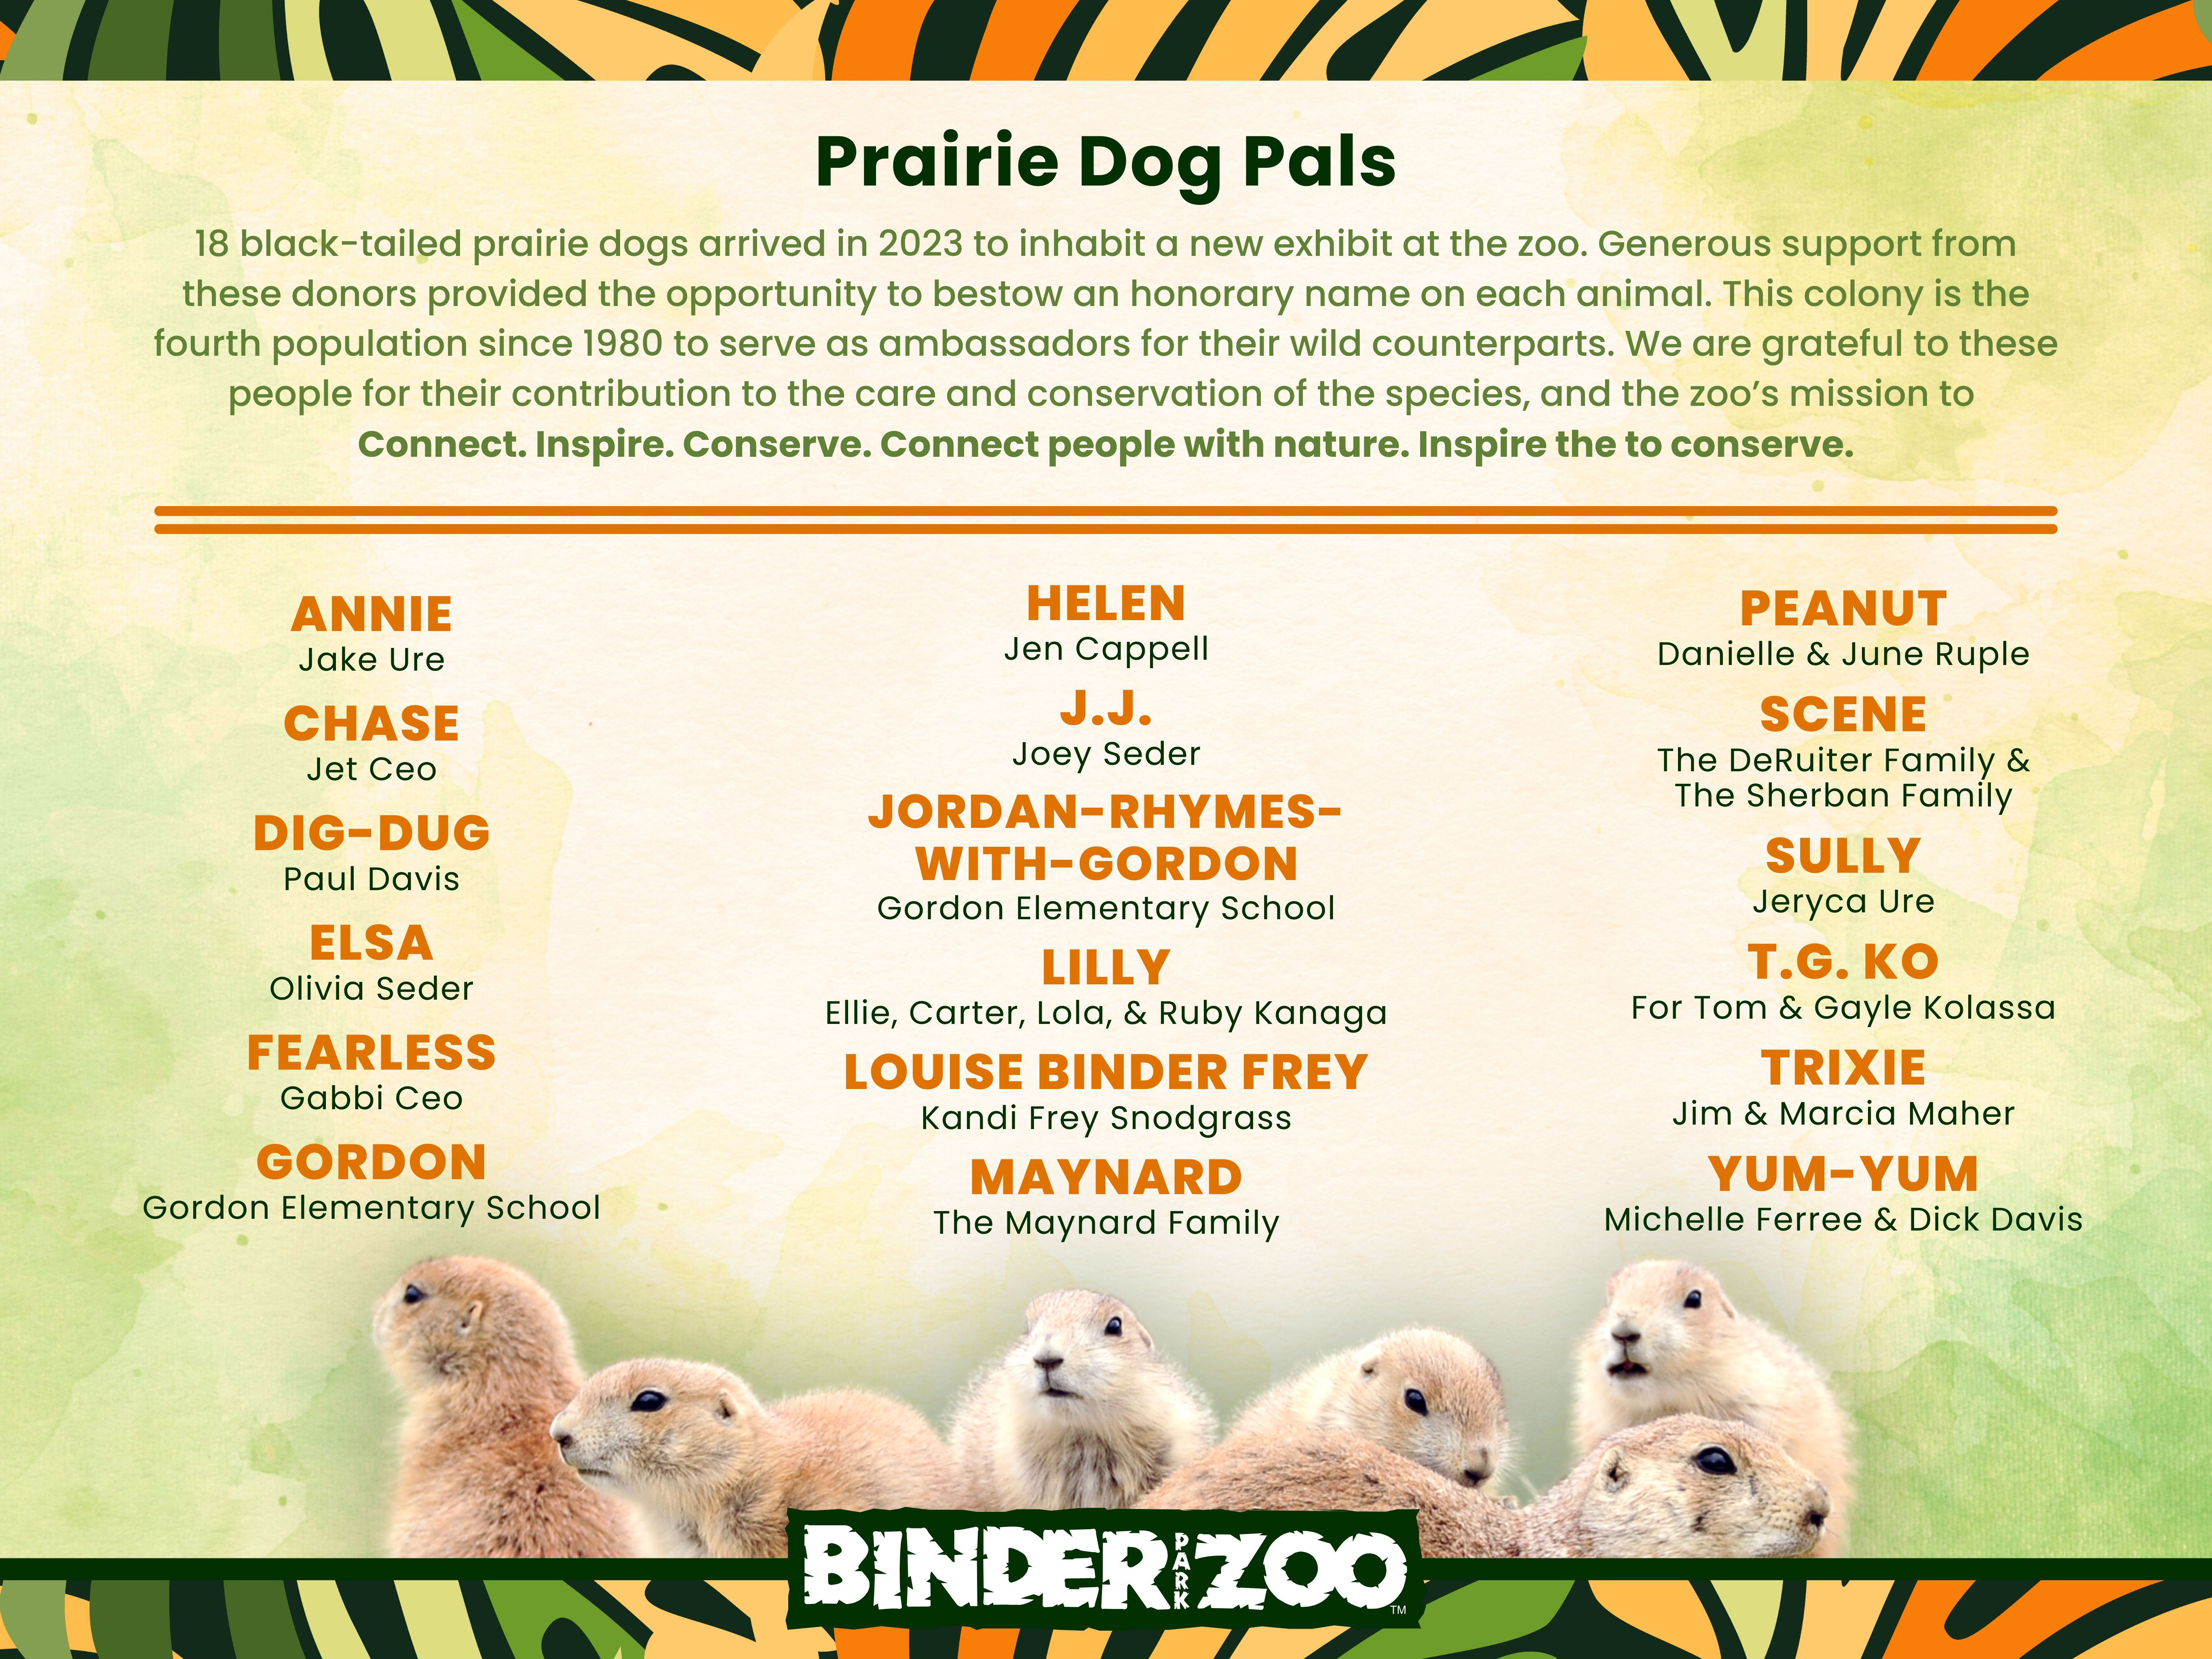 Prairie Dog Pal Donors